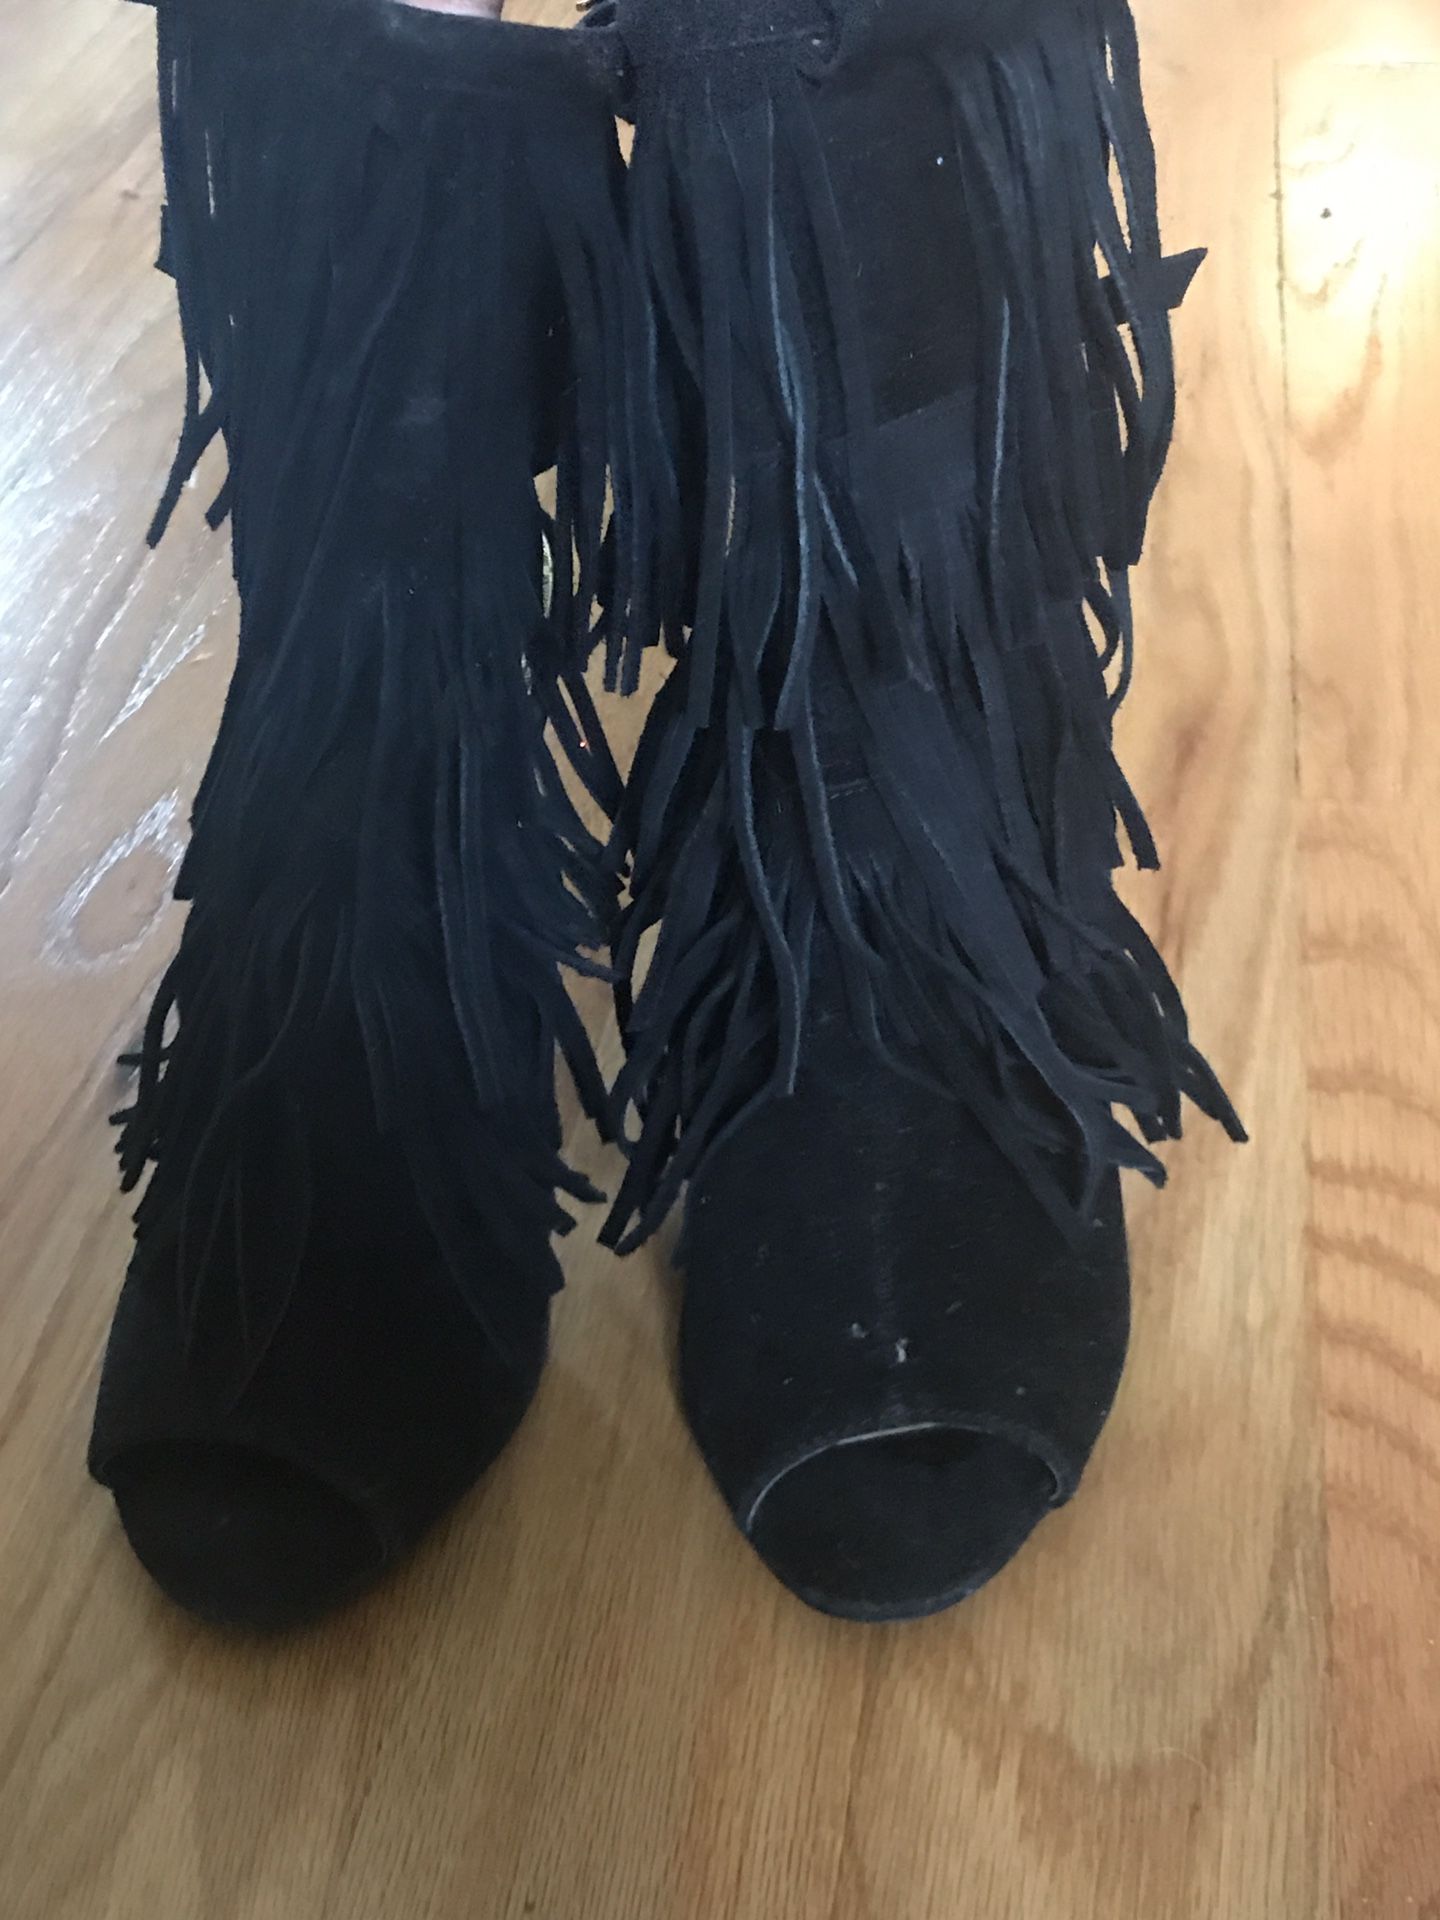 Black fringe booties/sandals